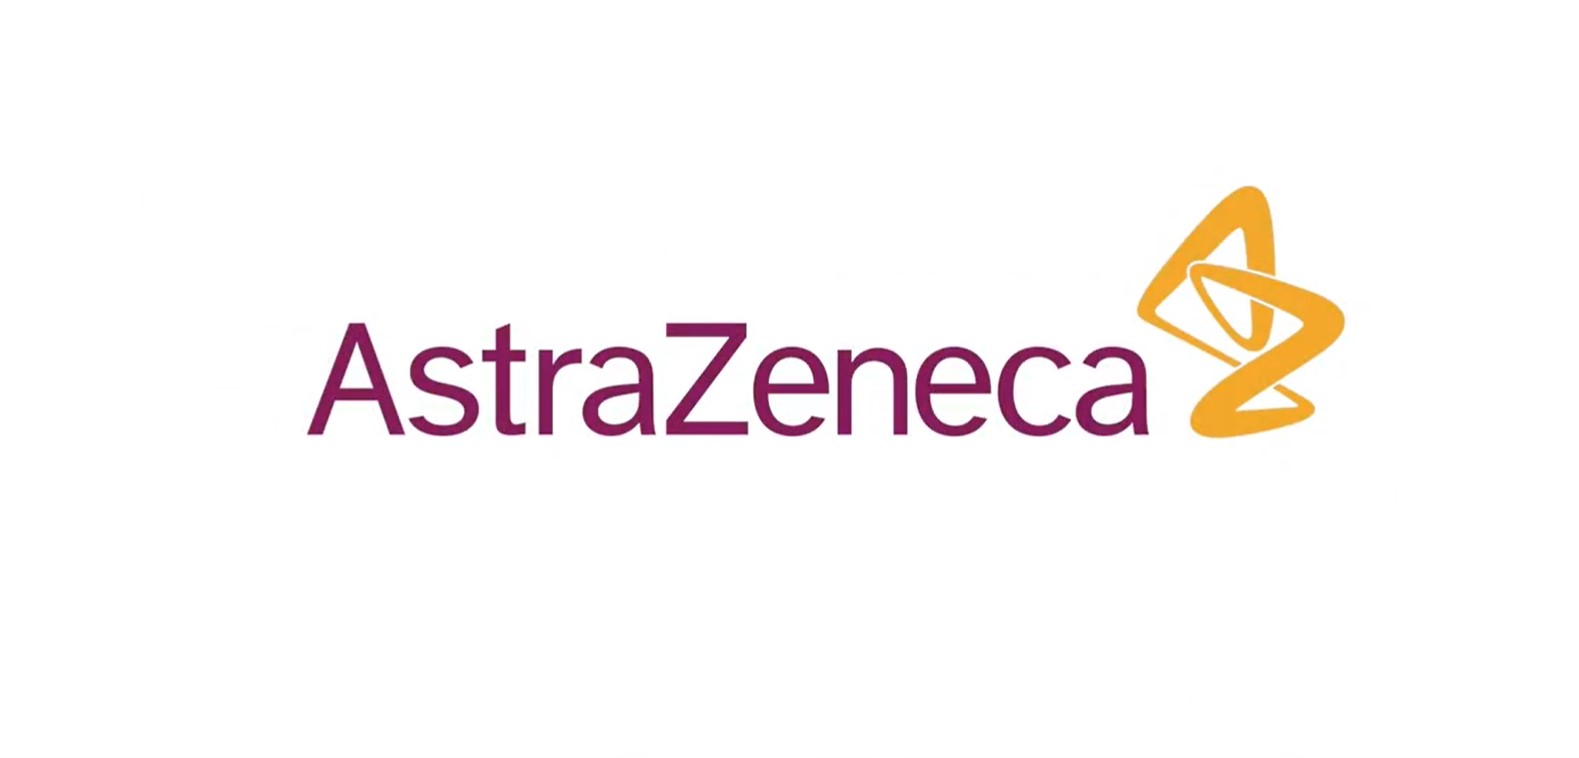 Brazil's Fiocruz begins distributing 2 mln India-made AstraZeneca shots 